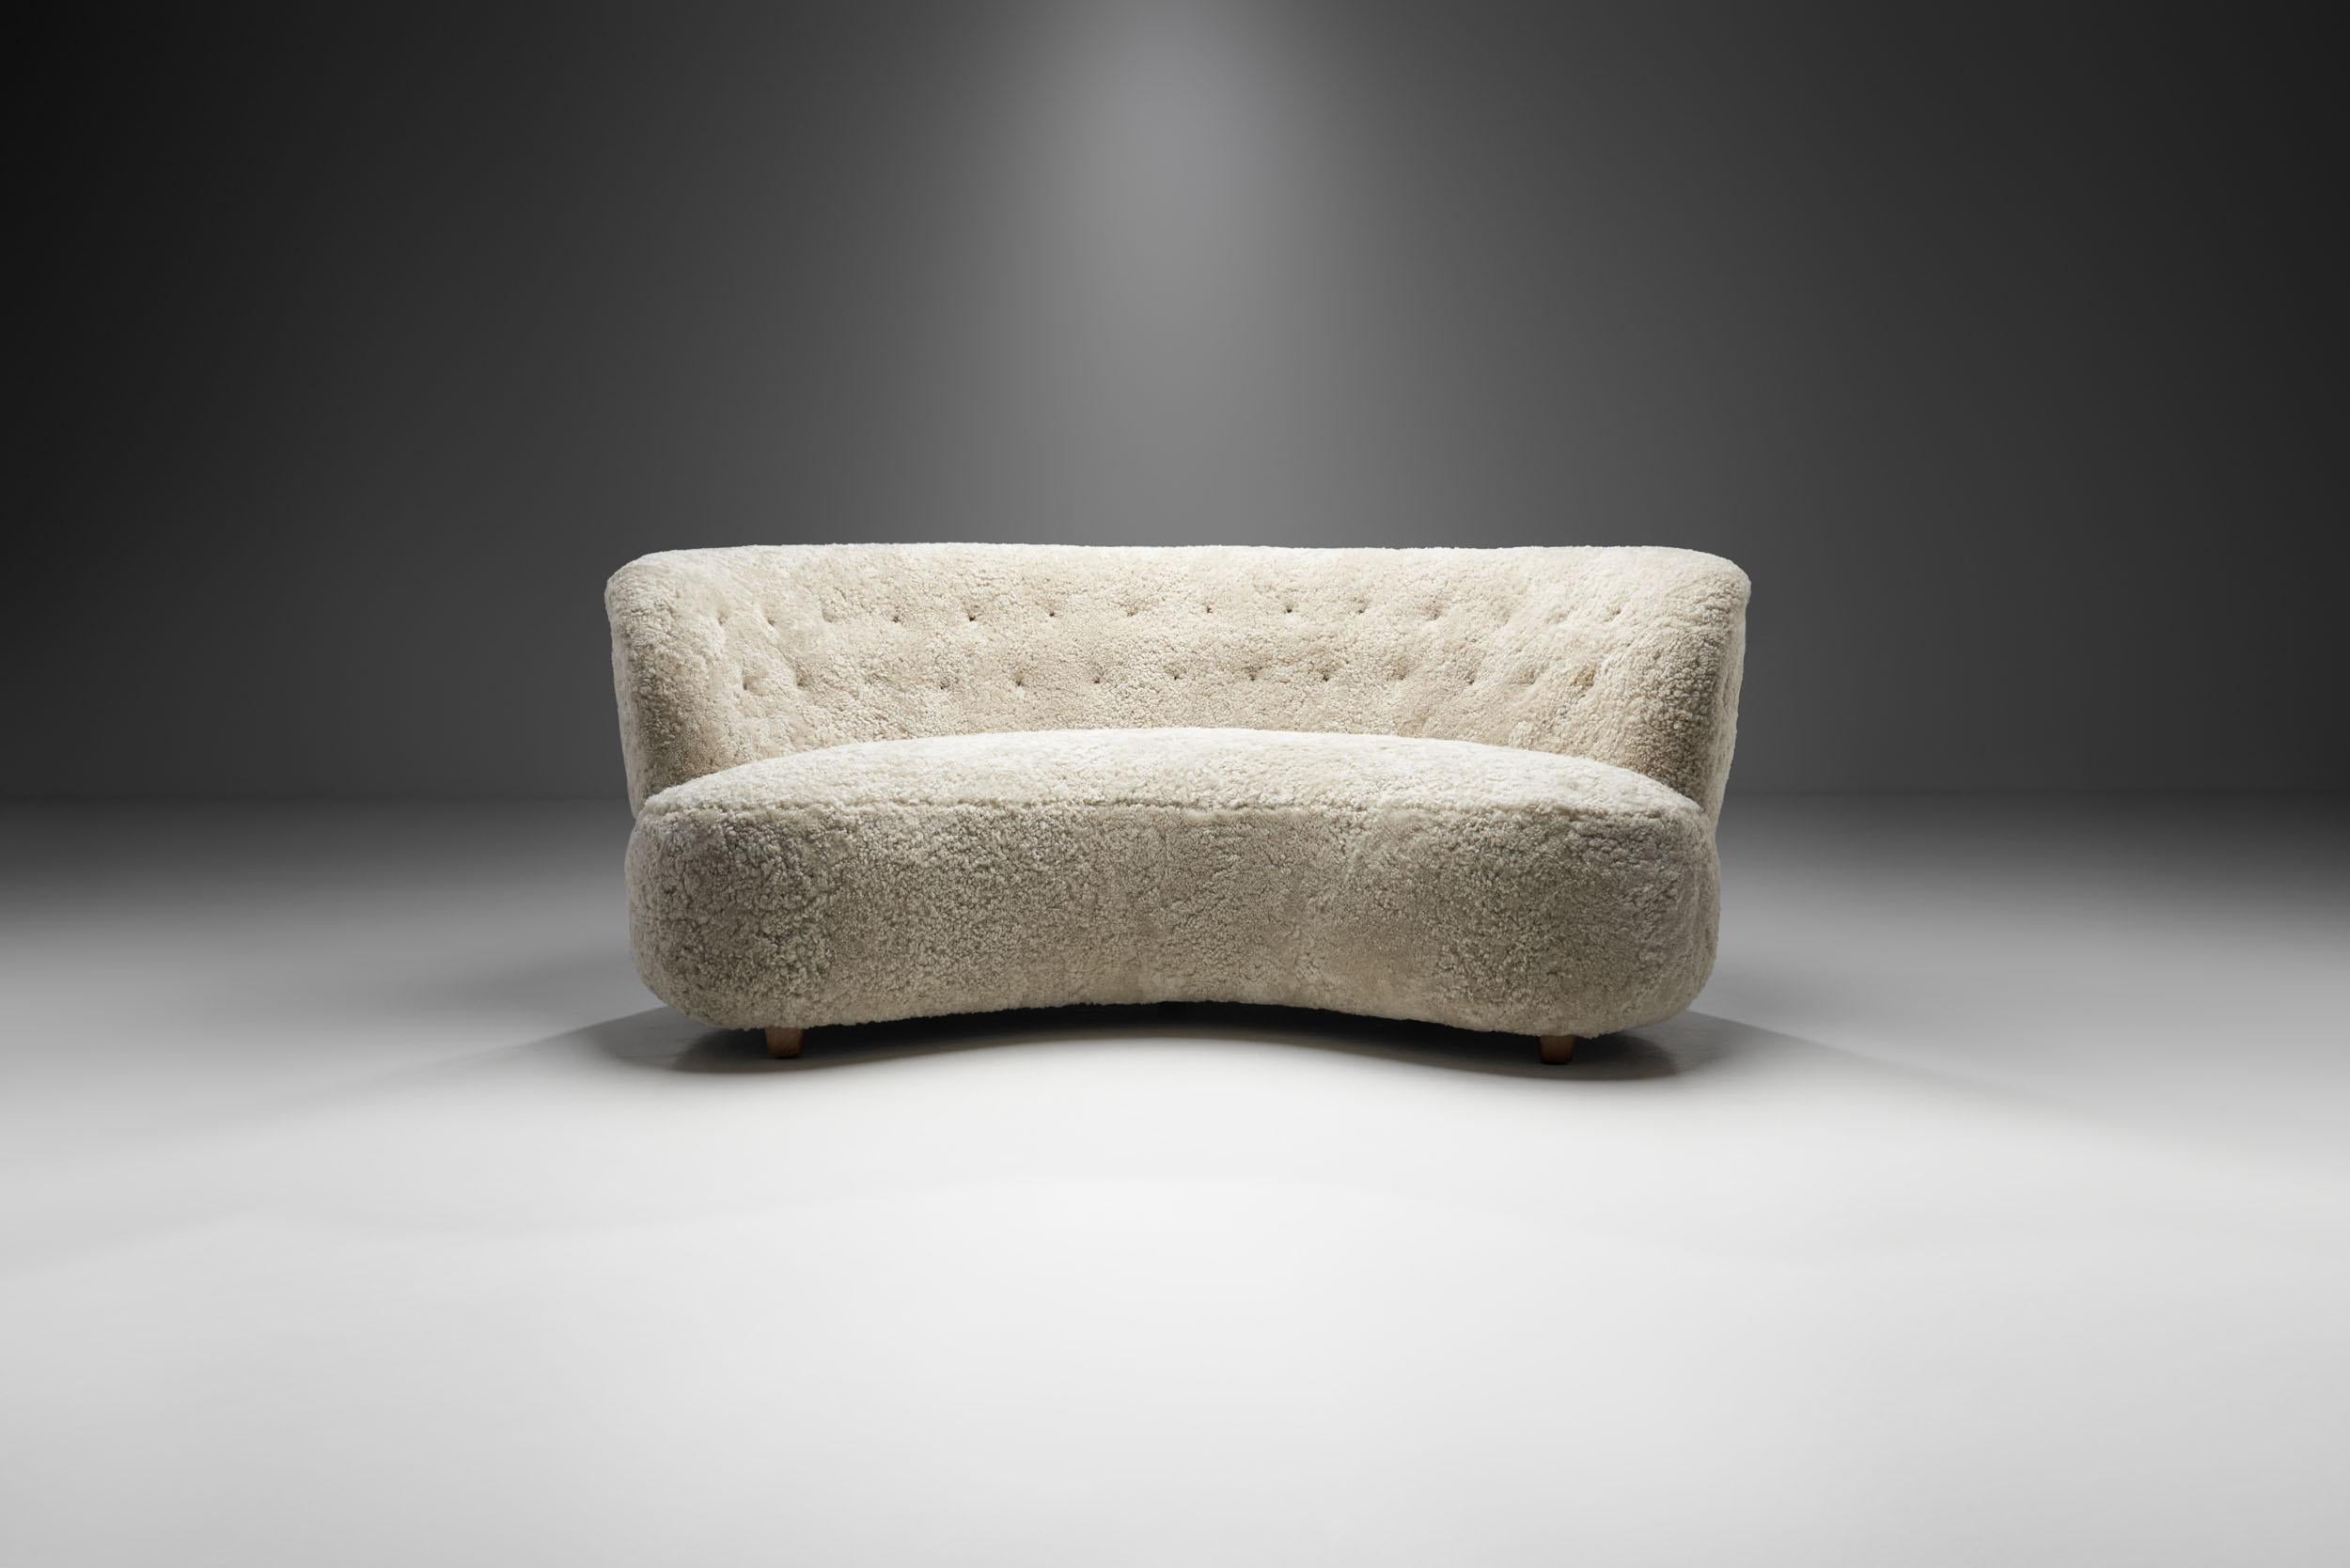 Nordic Modern Sofa in Sheepskin, Scandinavia mid-20th century In Good Condition For Sale In Utrecht, NL